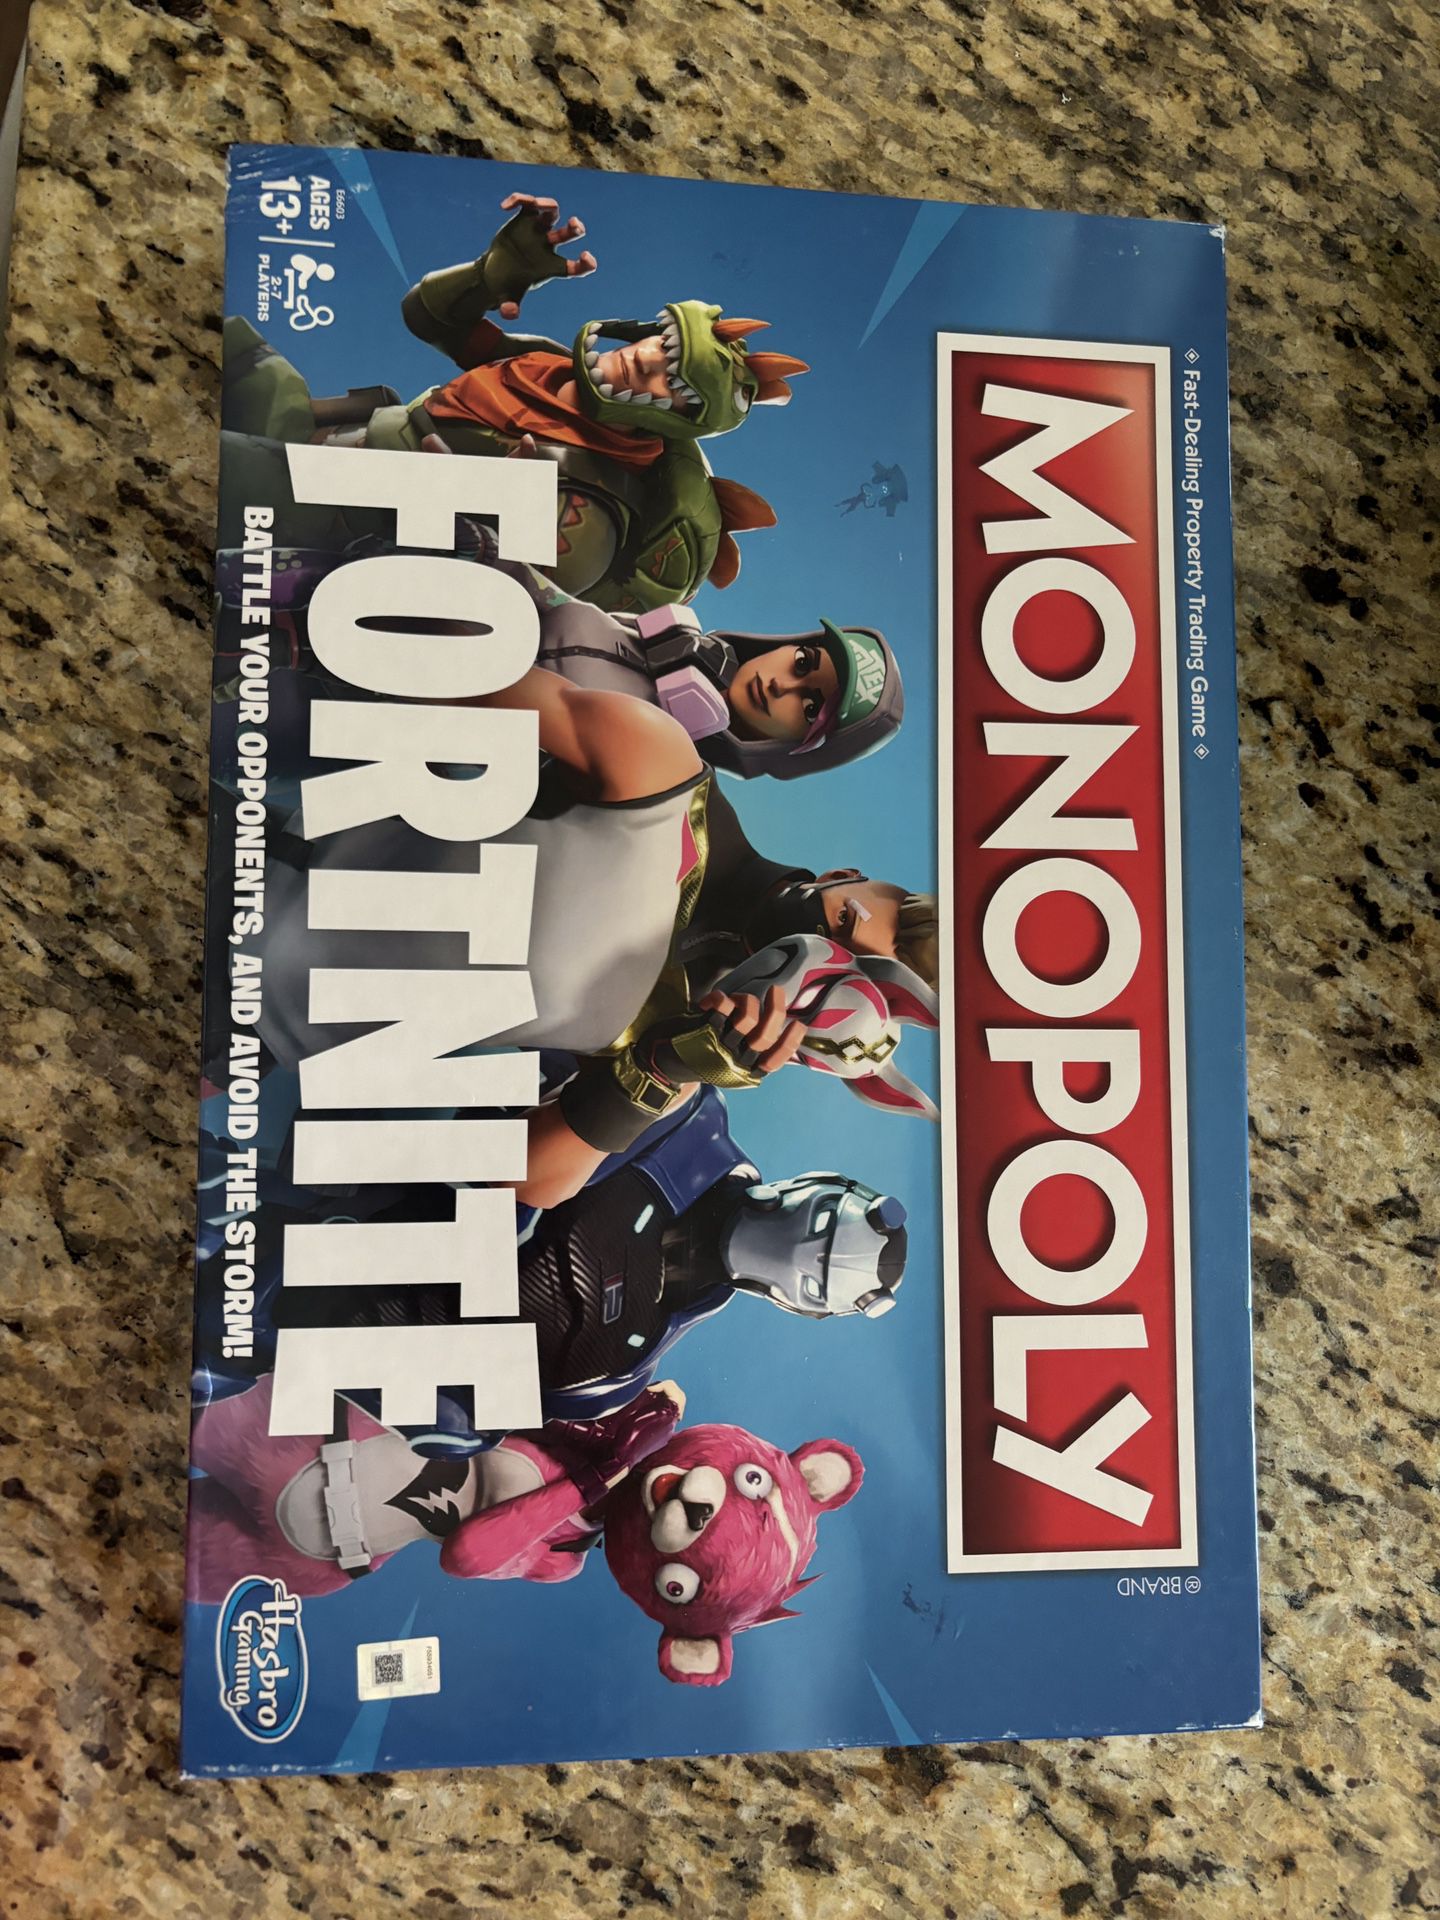 Fortnite Monopoly 